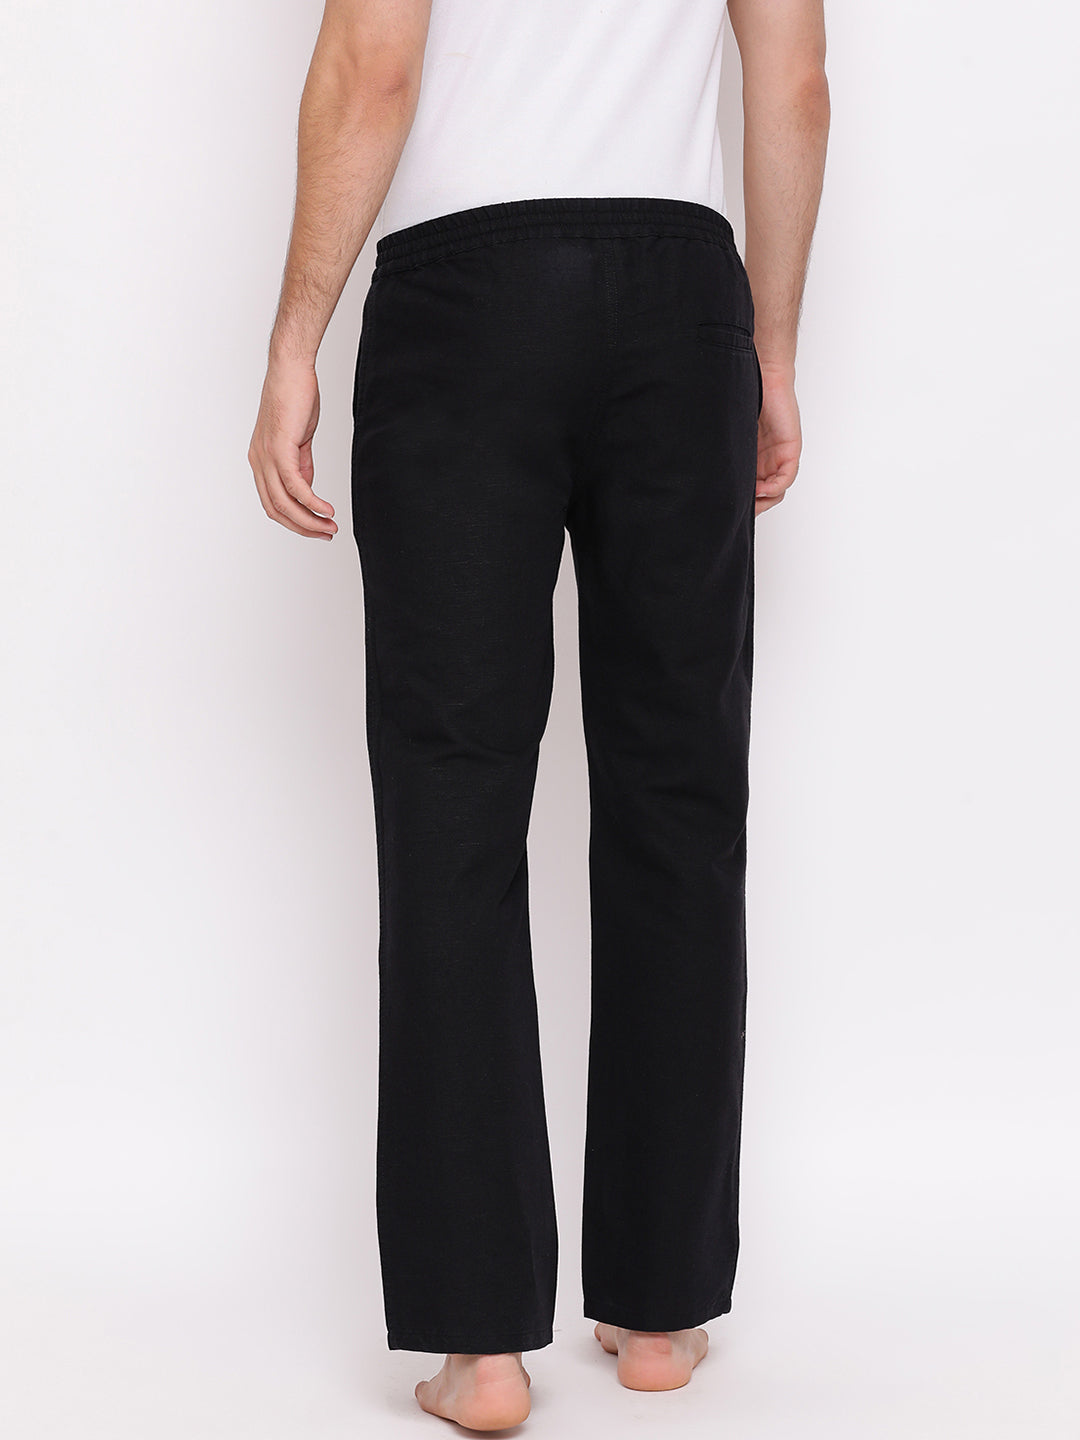 Black Straight Cotton Lounge Pants - Men Lounge Pants